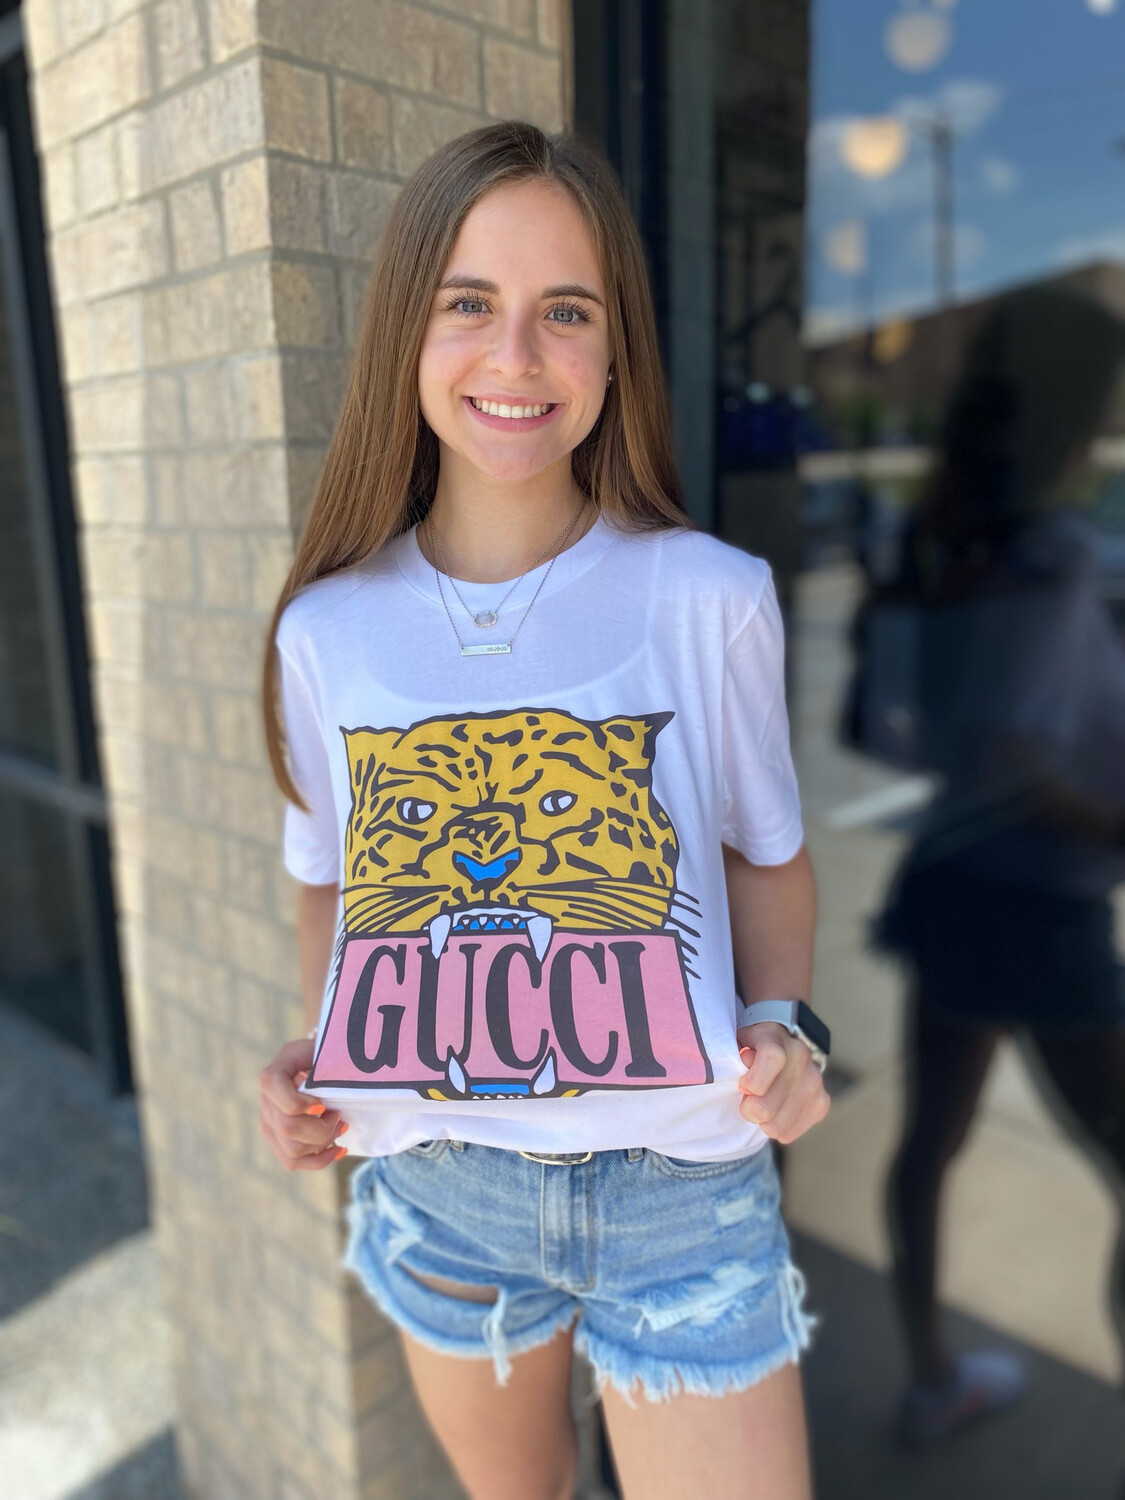 Gucci Tee